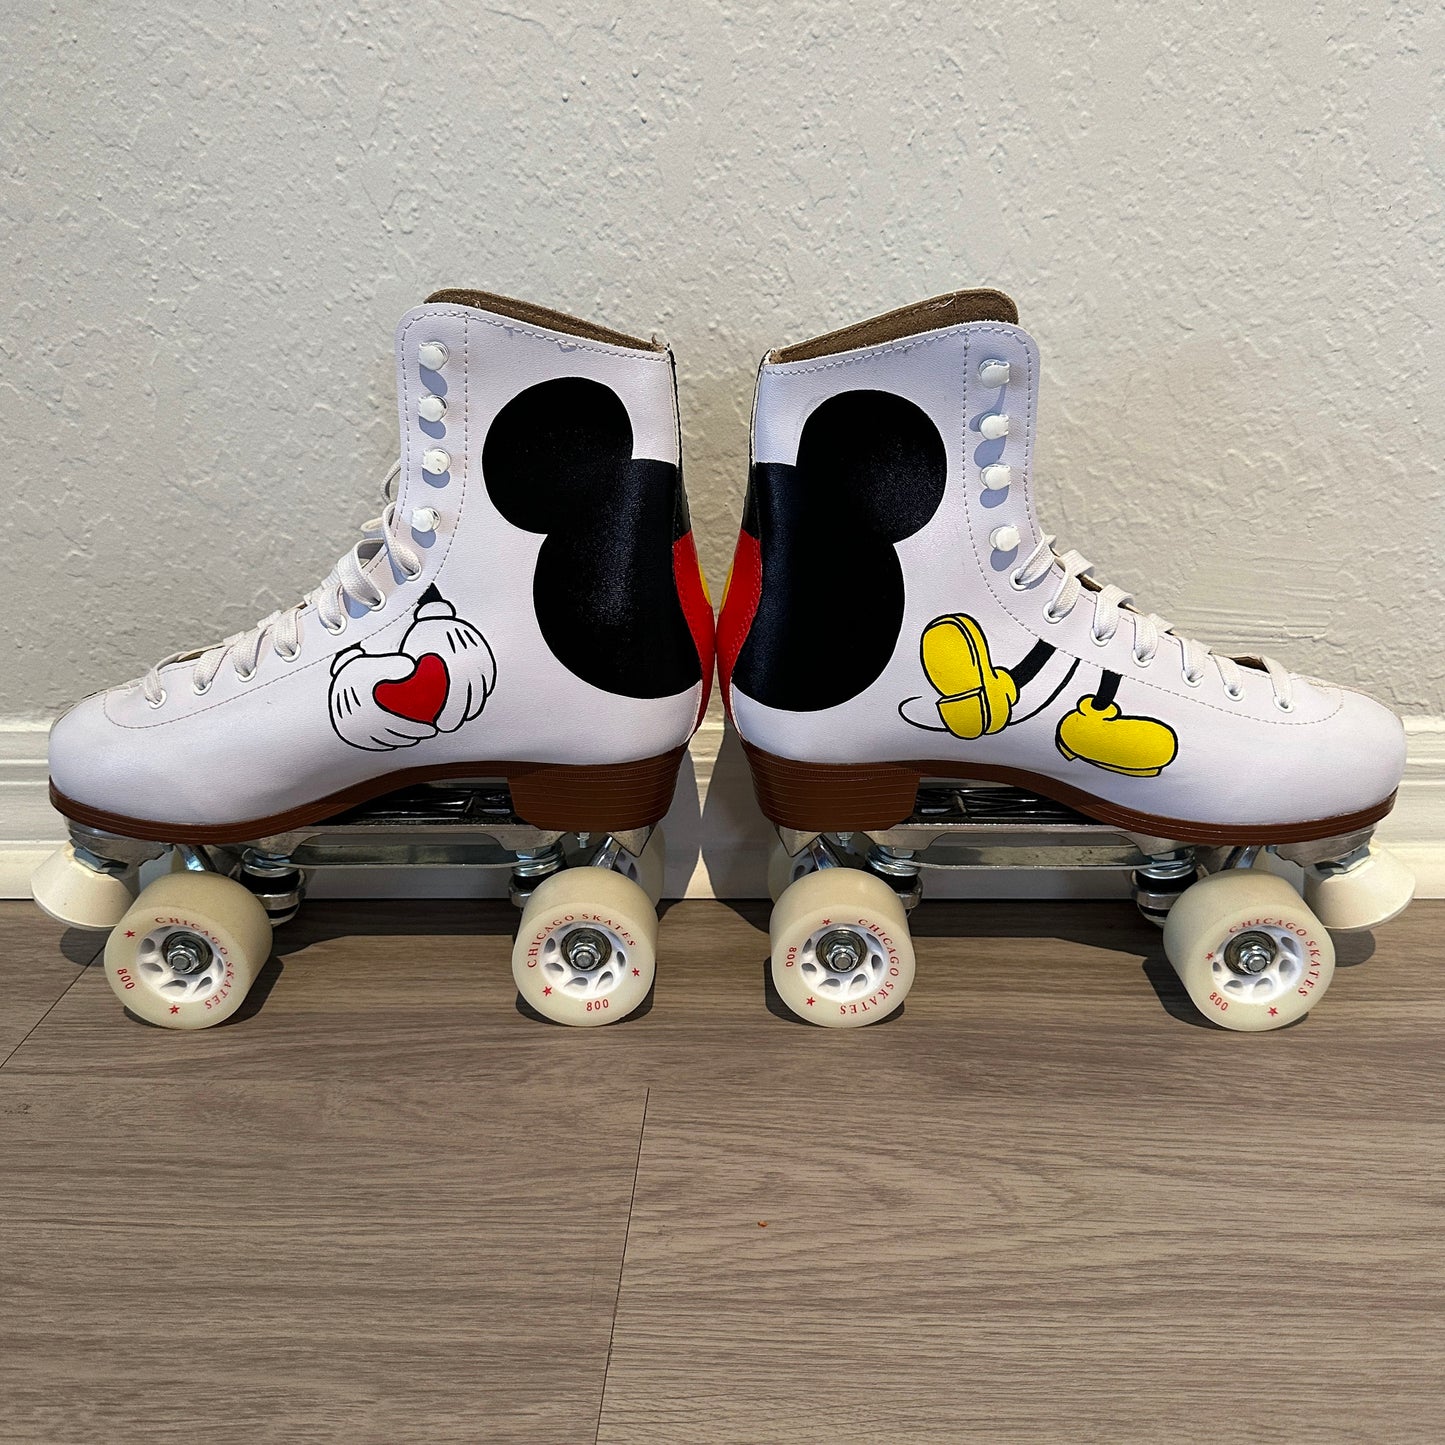 Chicago Disney World Magic Kingdom Custom Roller Skates